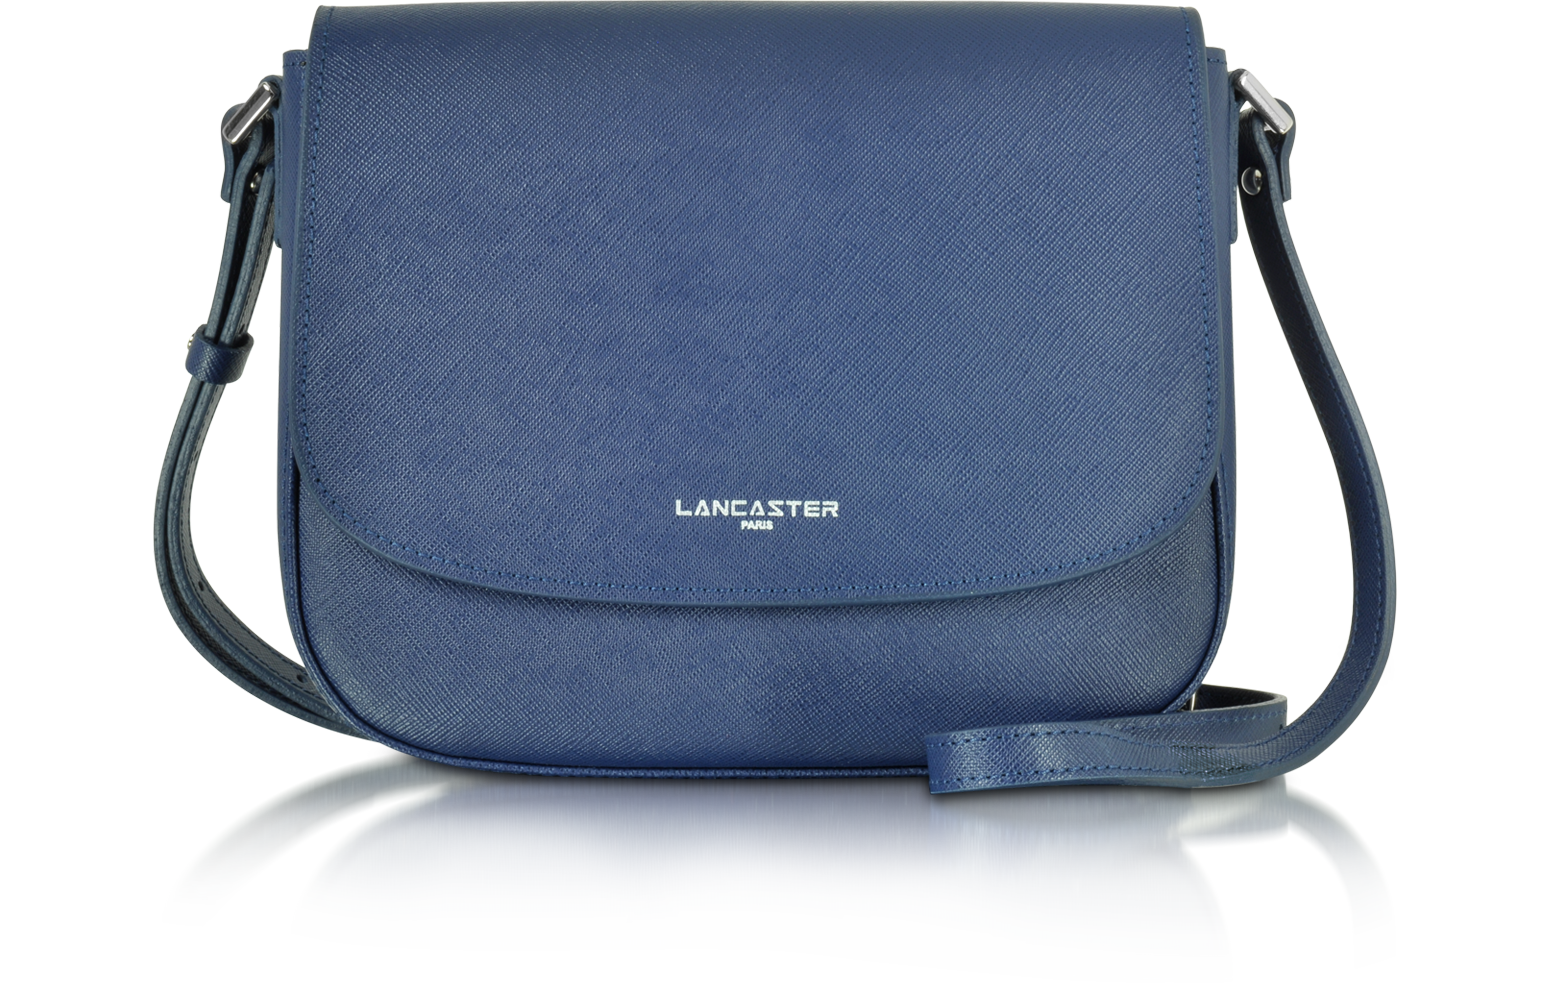 lancaster crossbody bag